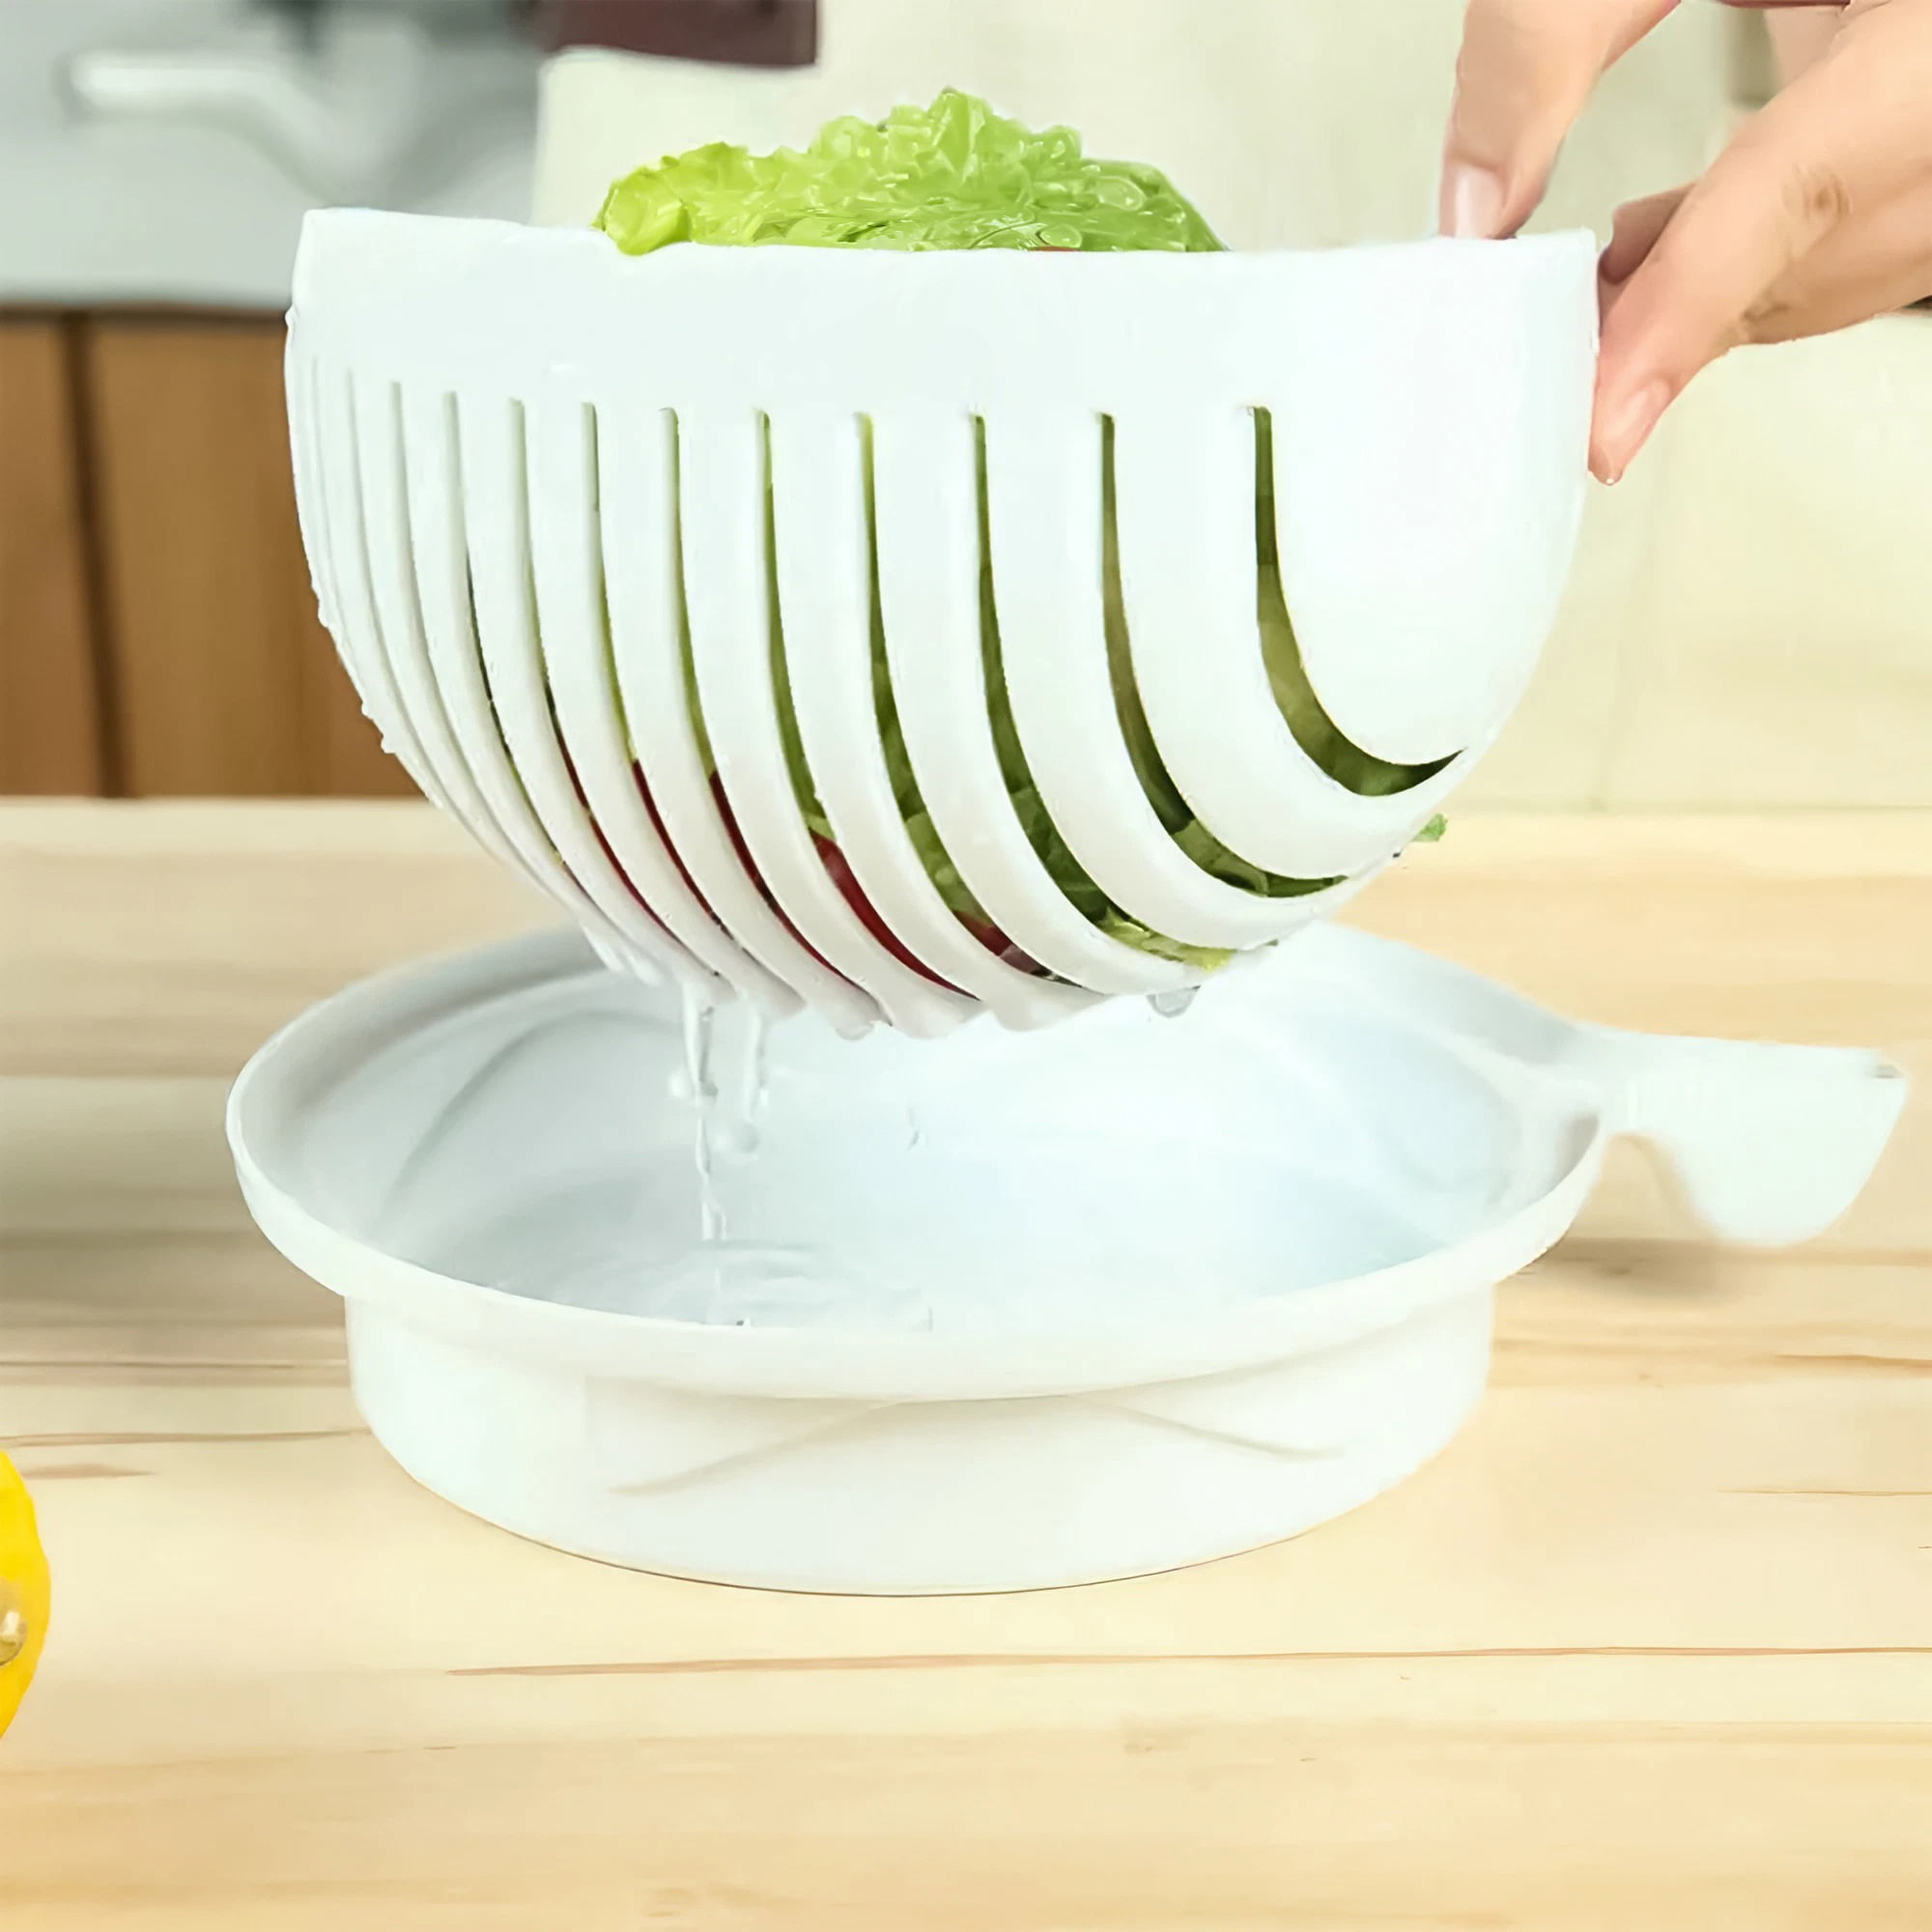 Salad Cutter Bowl, Multifunctional Salad Cutter Bowl